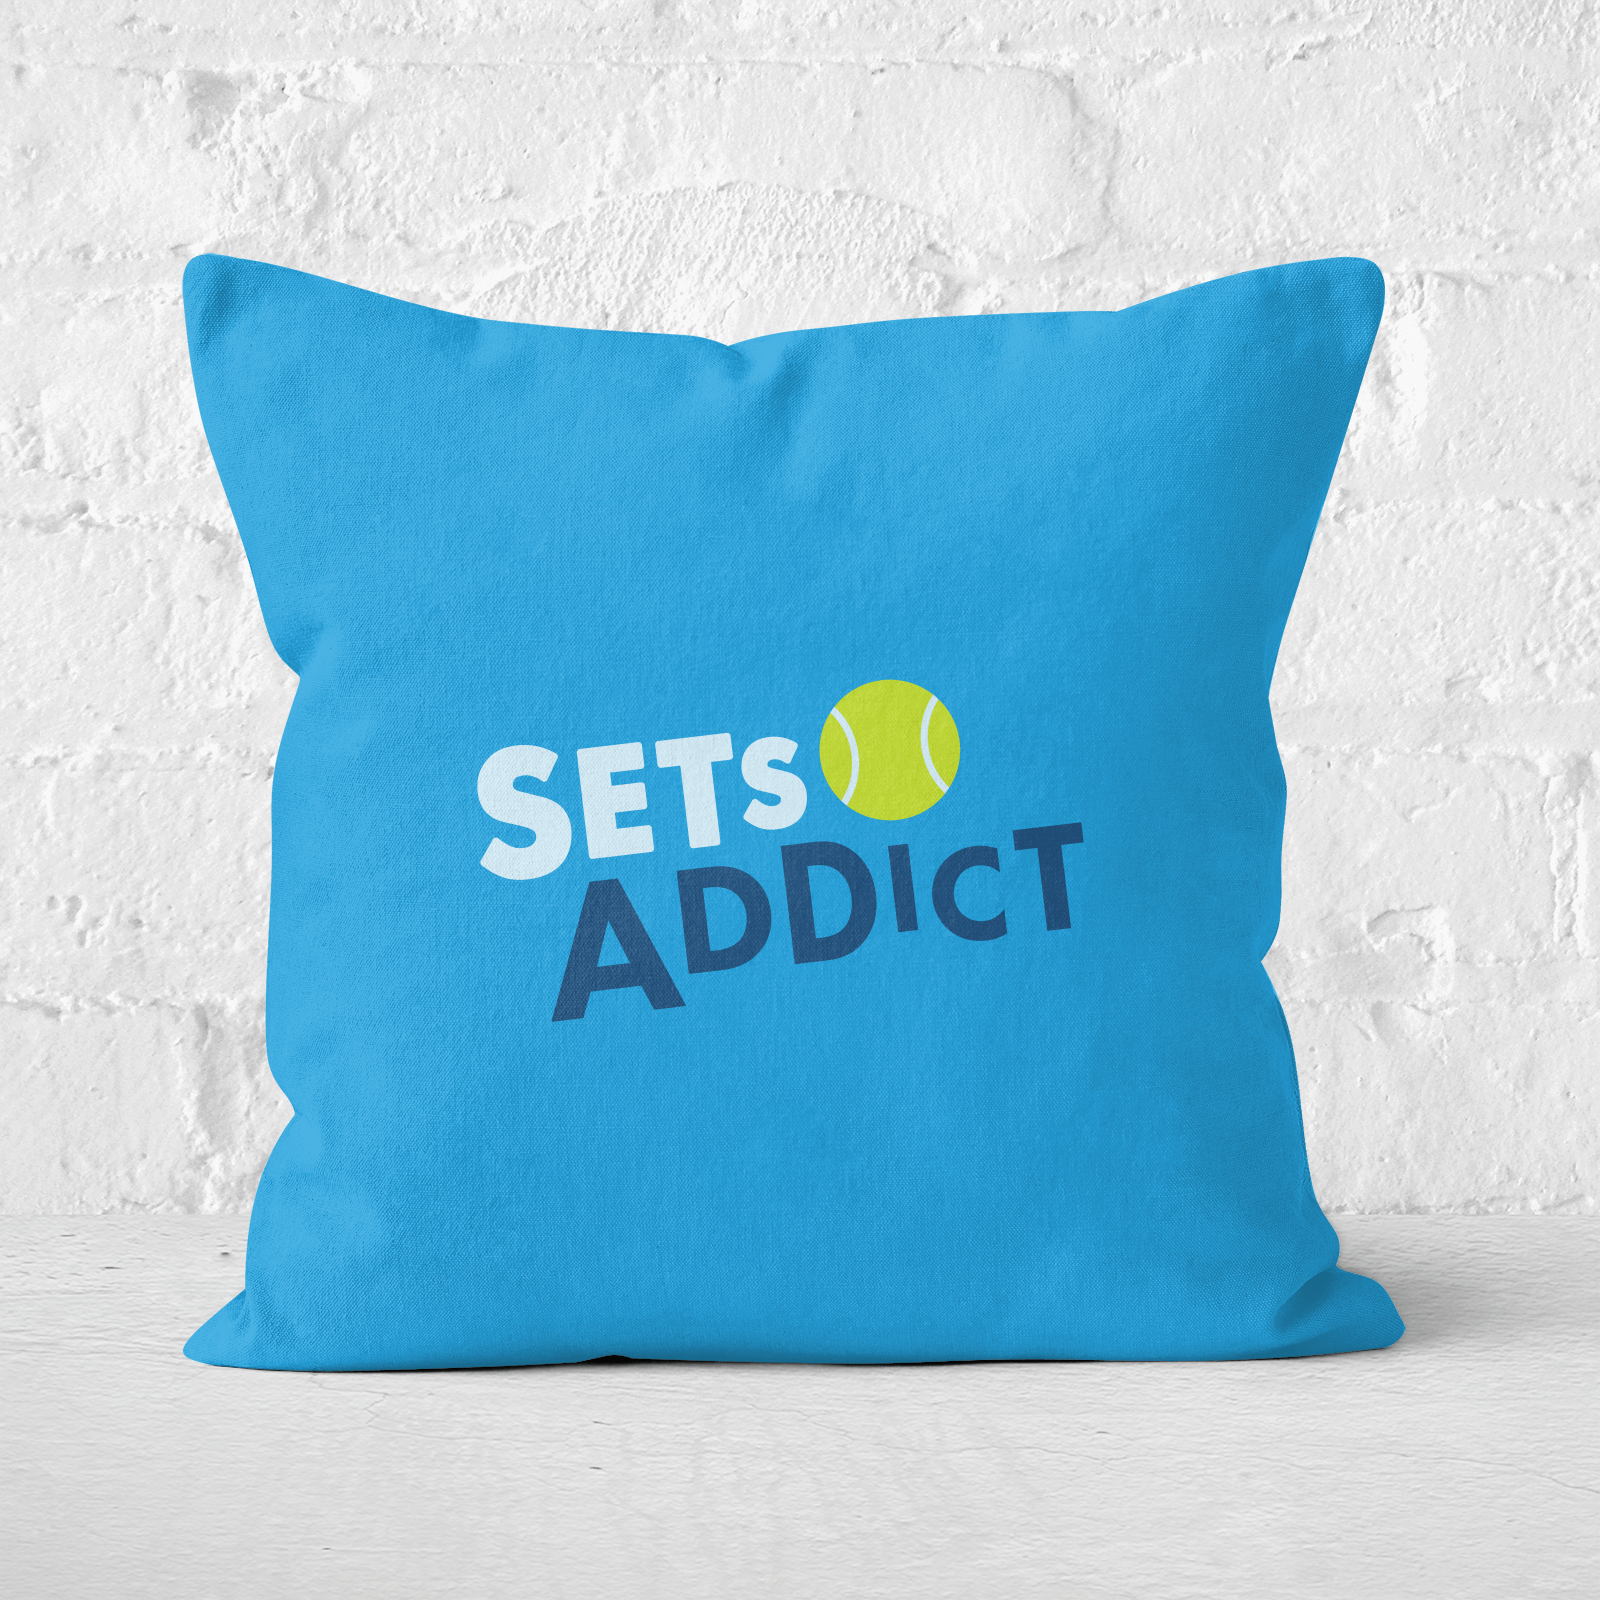 Set Addicts Square Cushion   60x60cm   Soft Touch